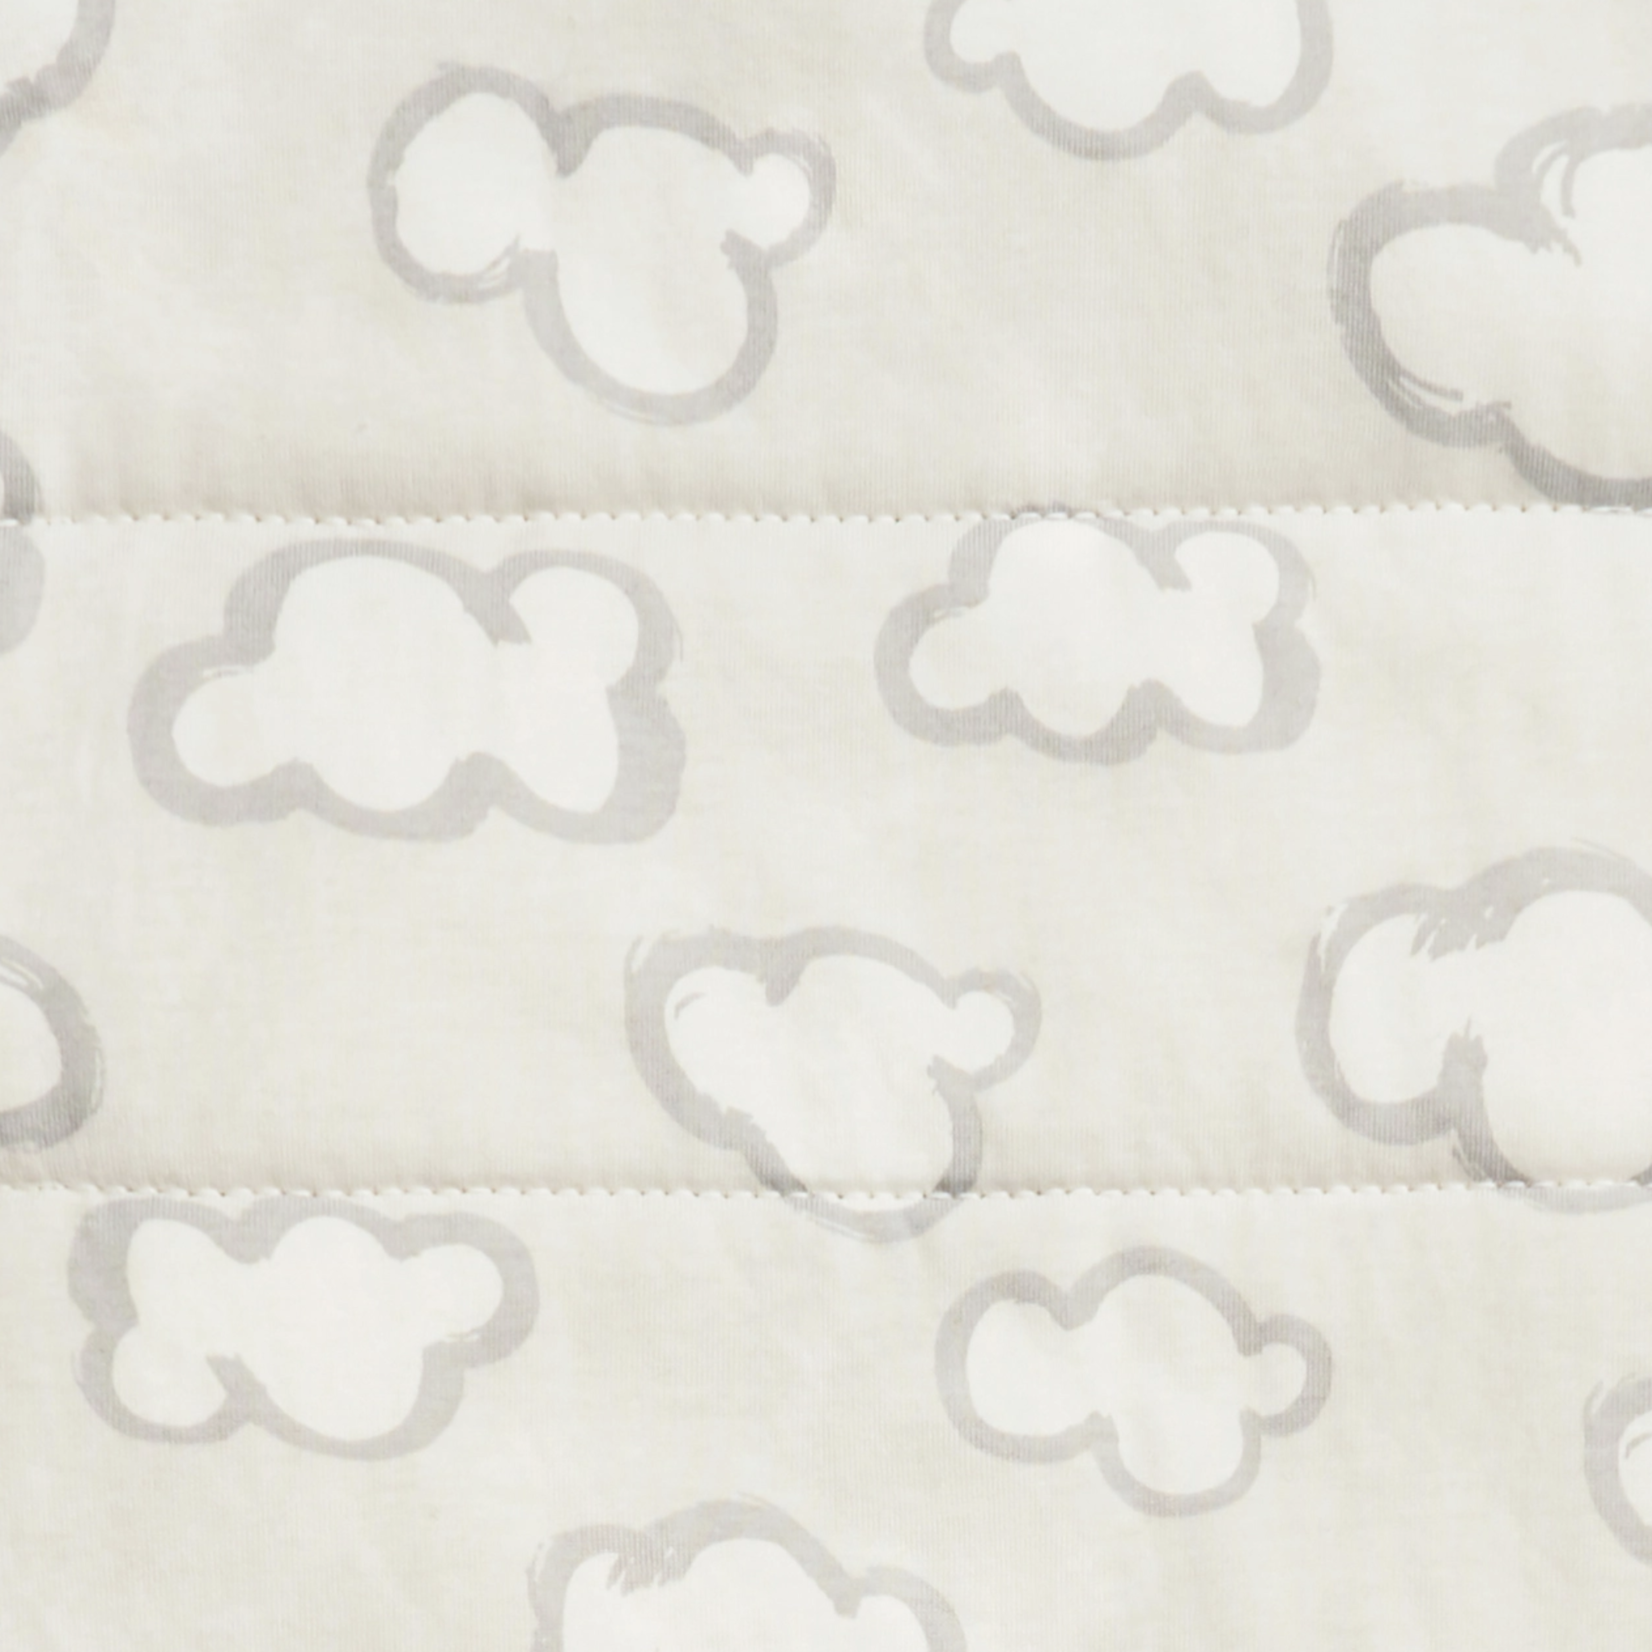 Love To Dream Sleep Bag WARM 2.5 TOG-Grey Daydream